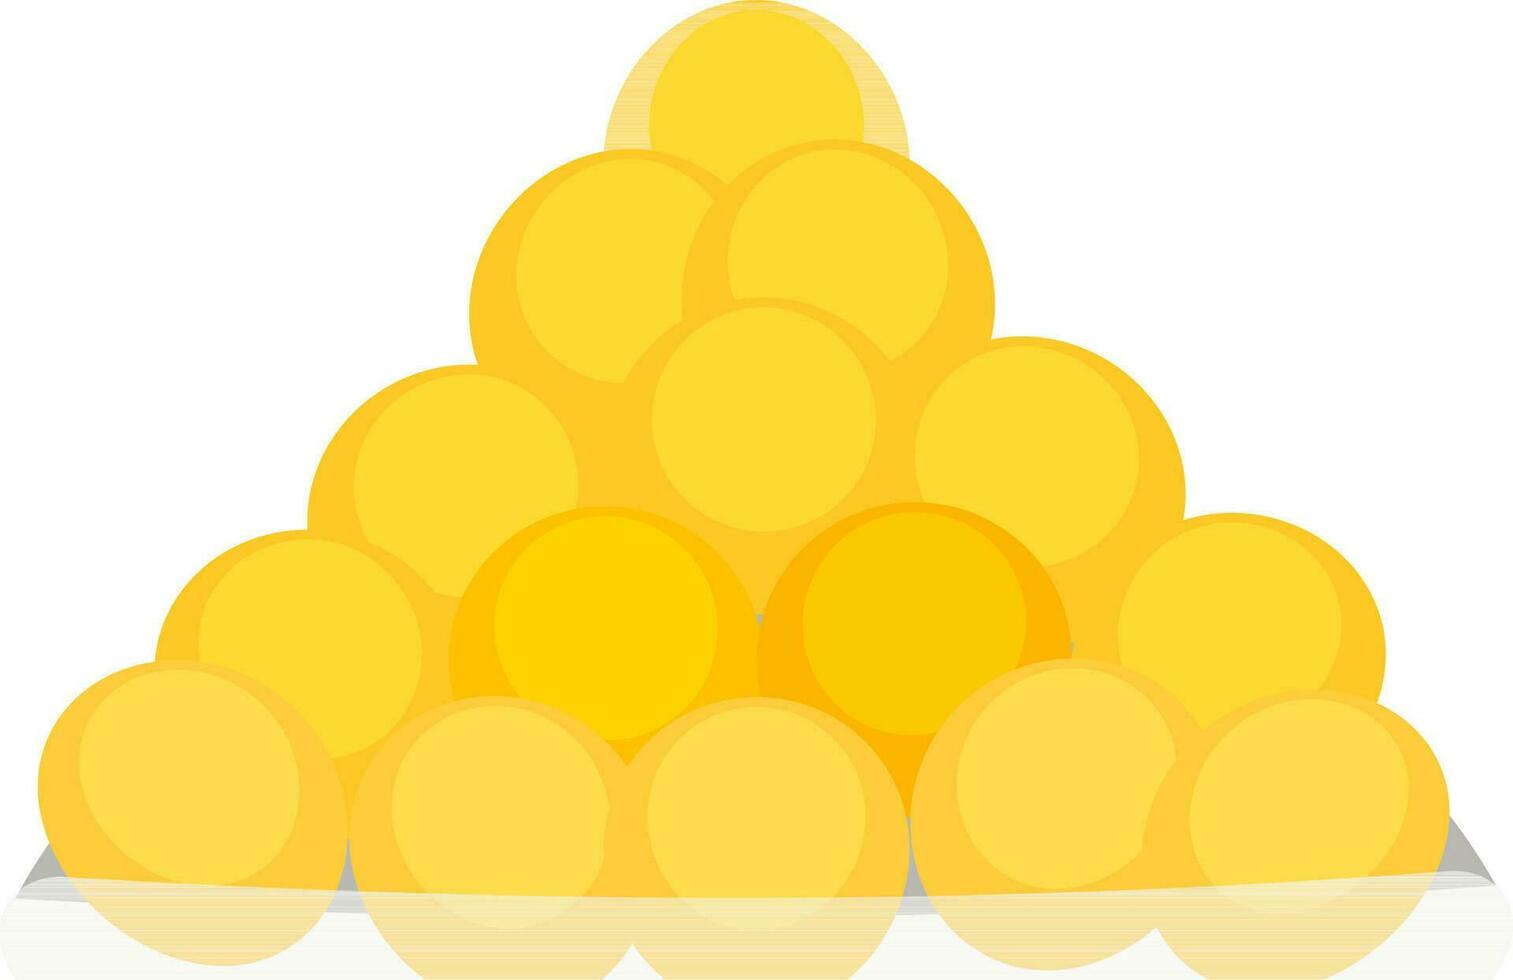 plano estilo doce bolas laddu elemento dentro amarelo cor. vetor